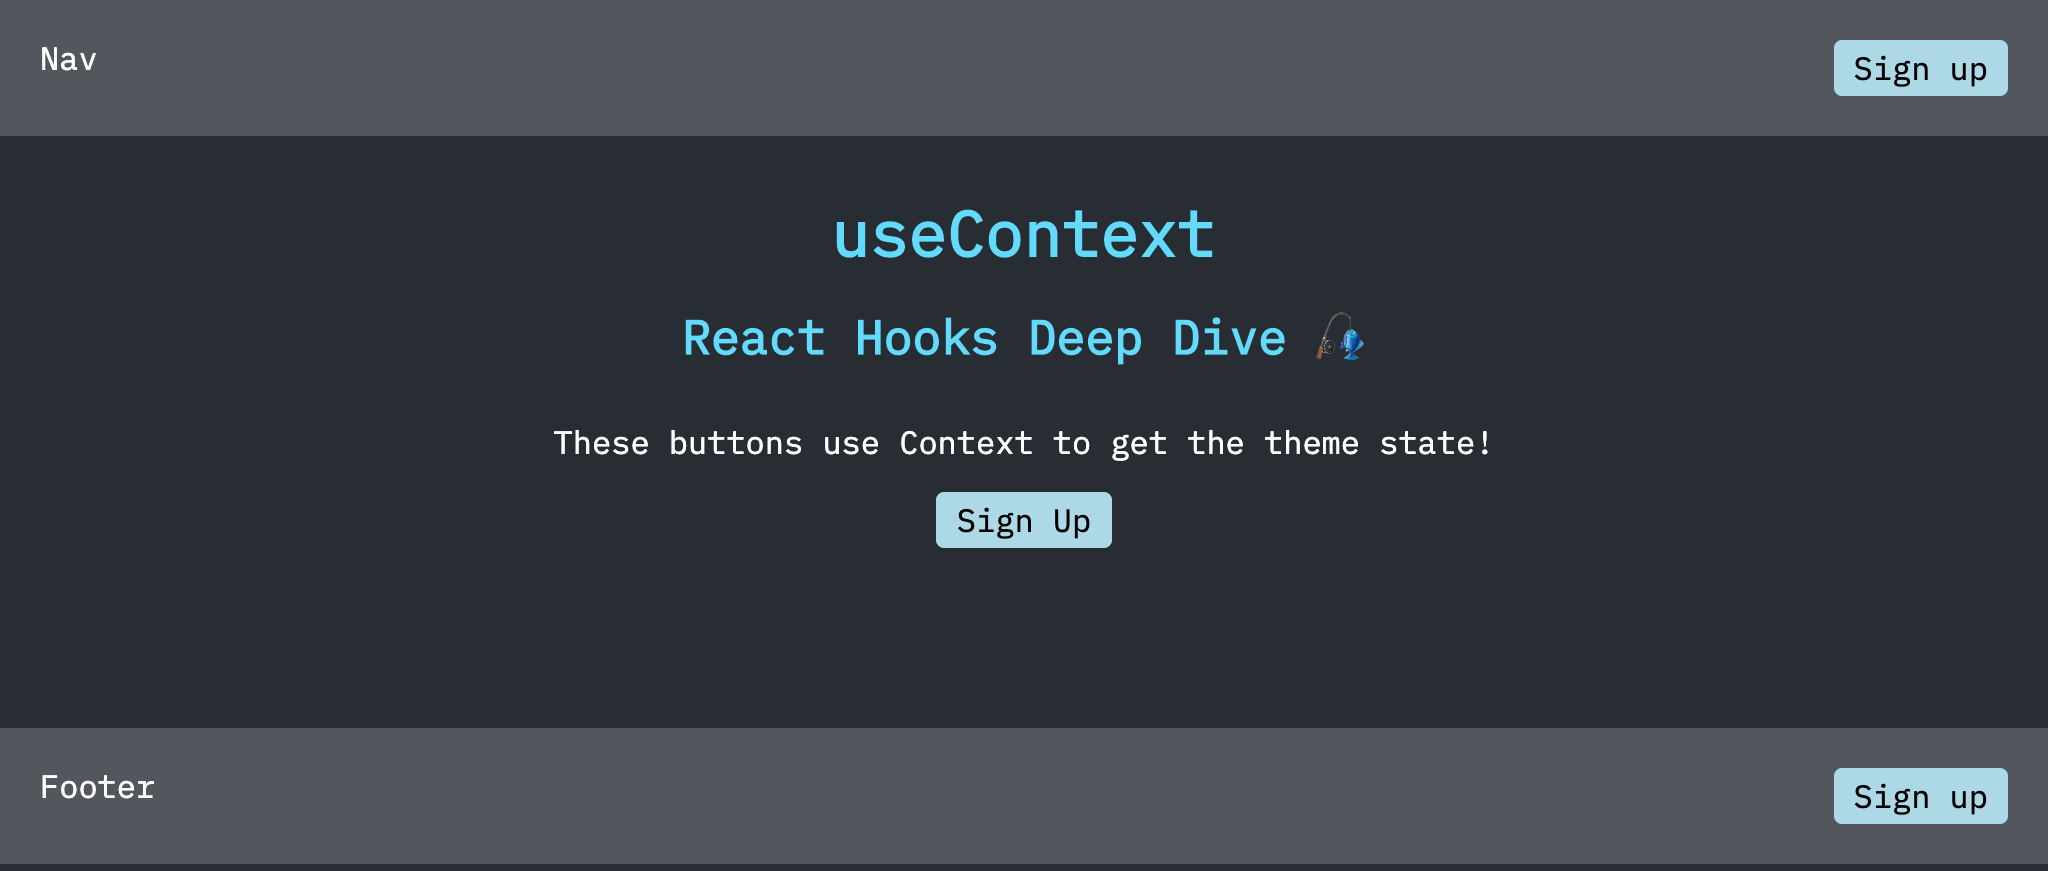 react-hooks-deep-dive-usecontext-example